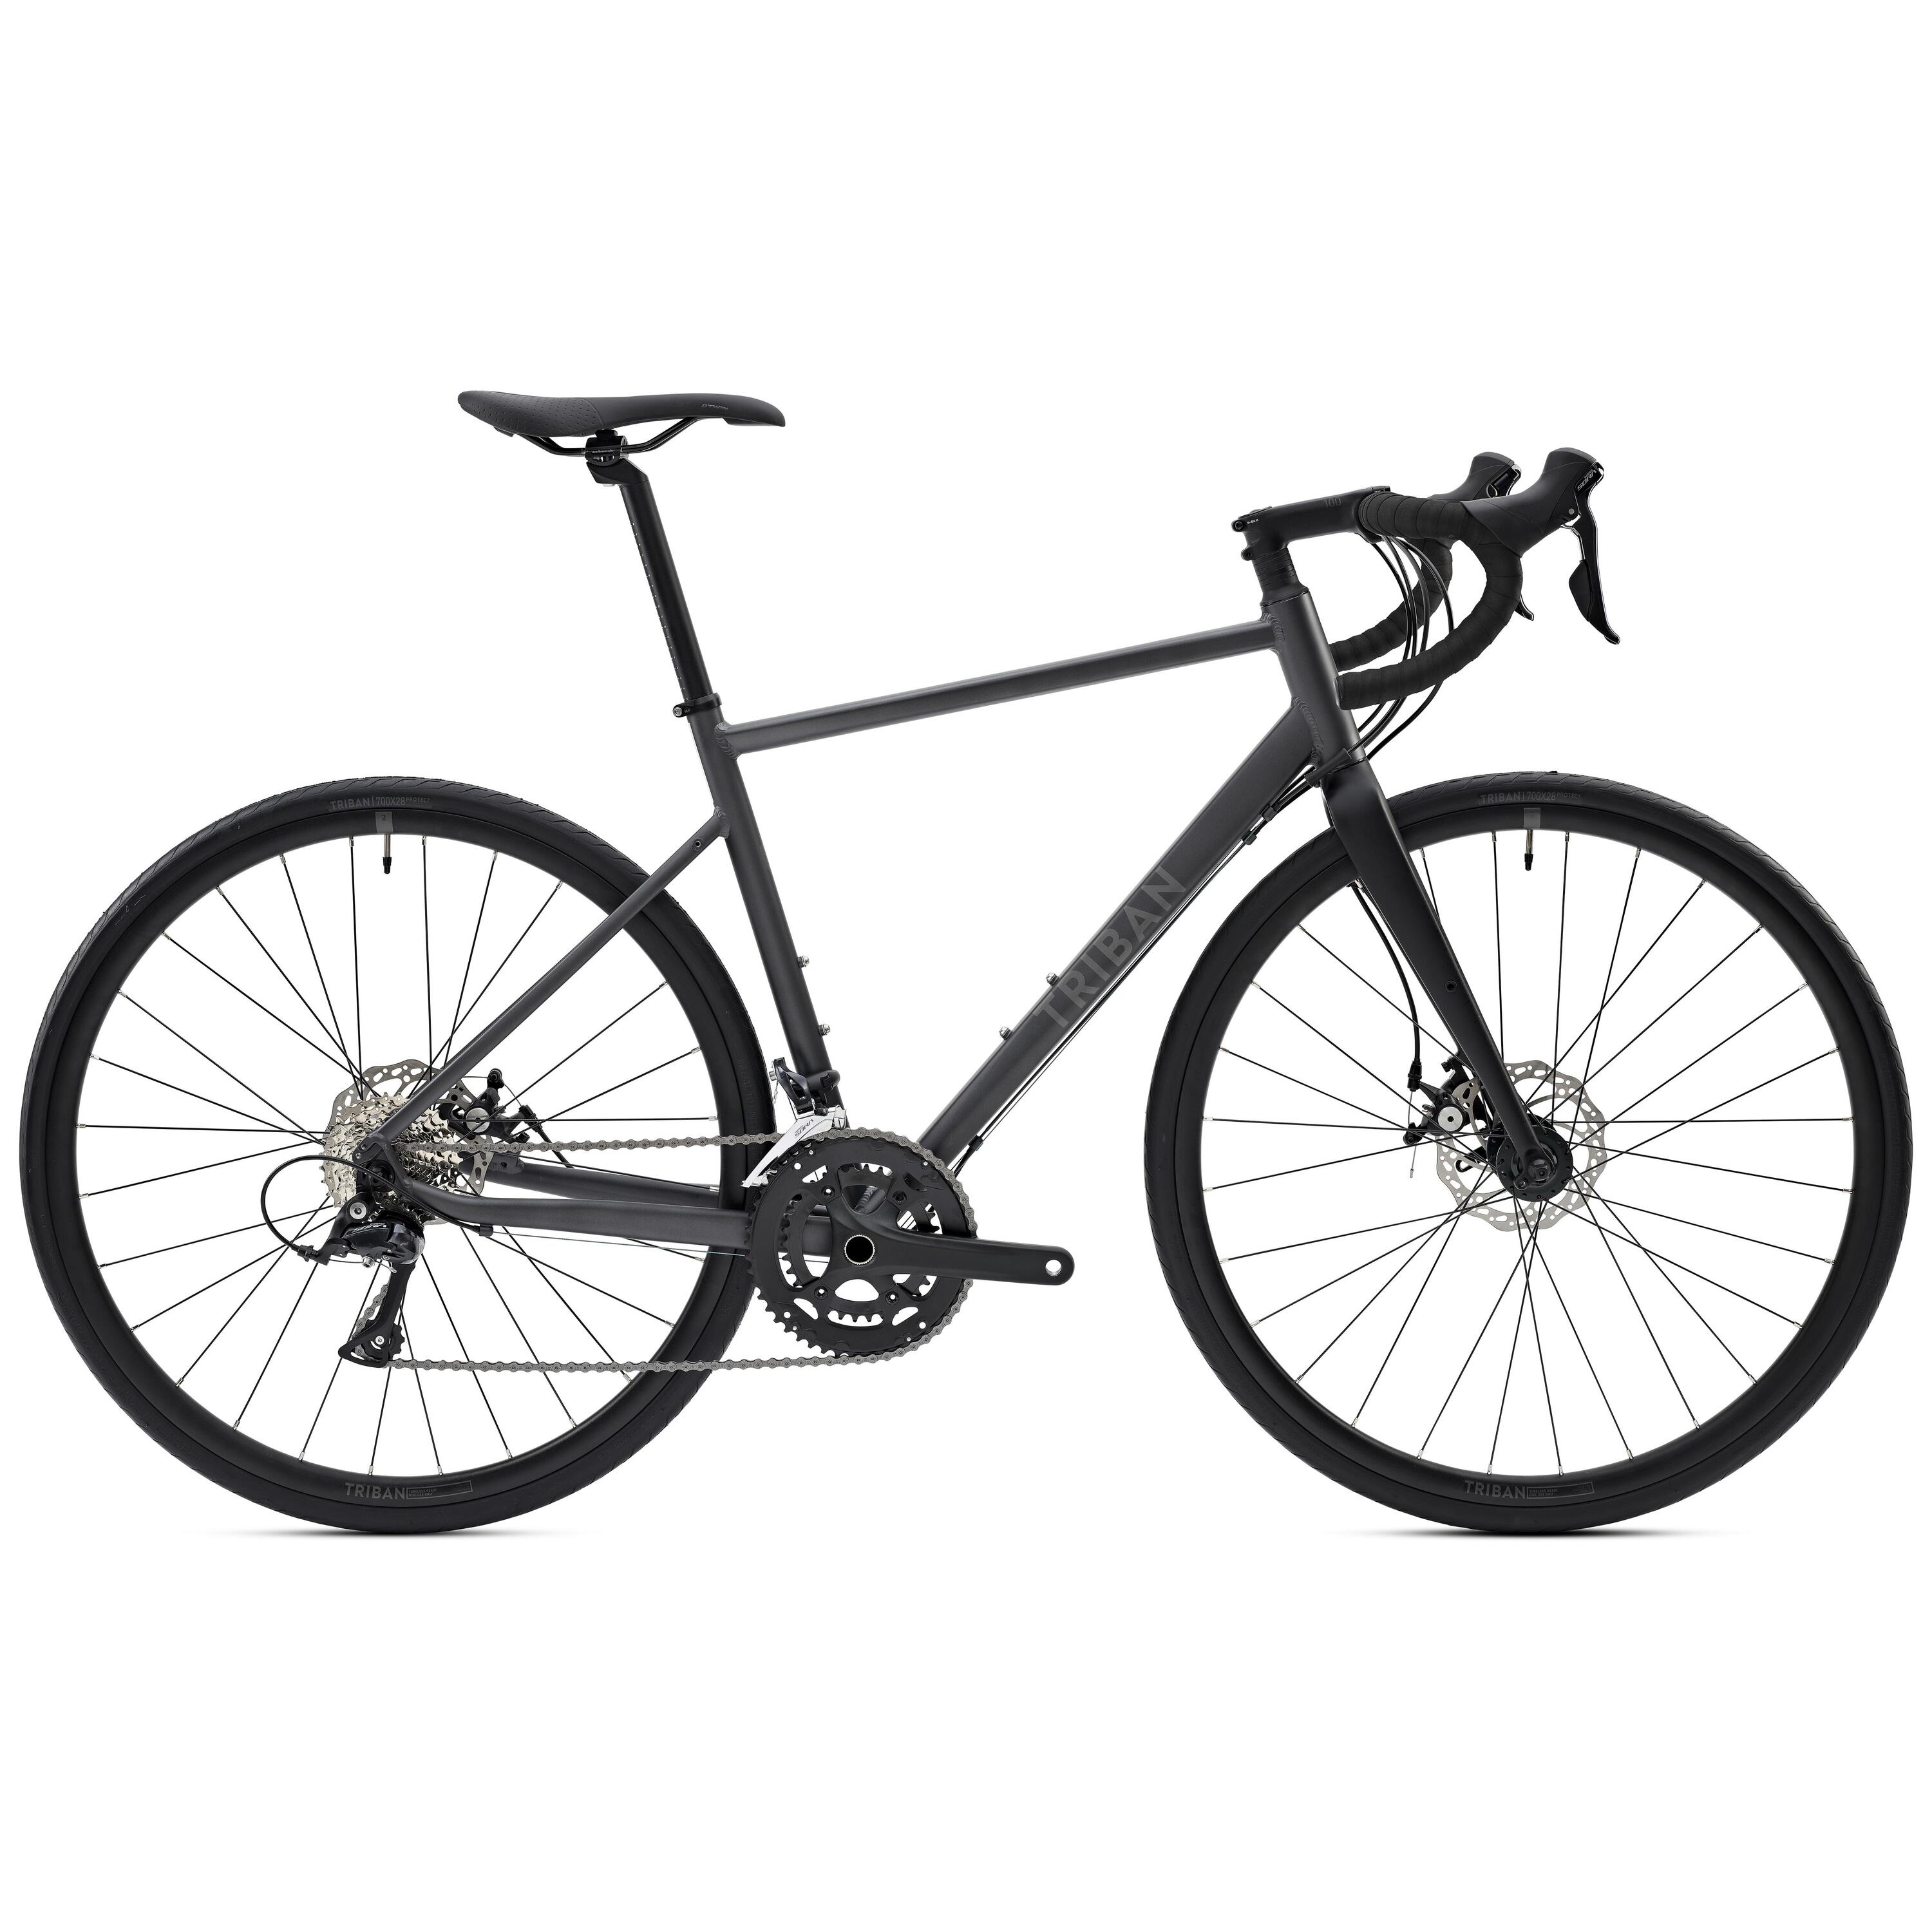 bicicleta-carreteracicloturismo-triban-rc500-negro-soraprowheel.jpg